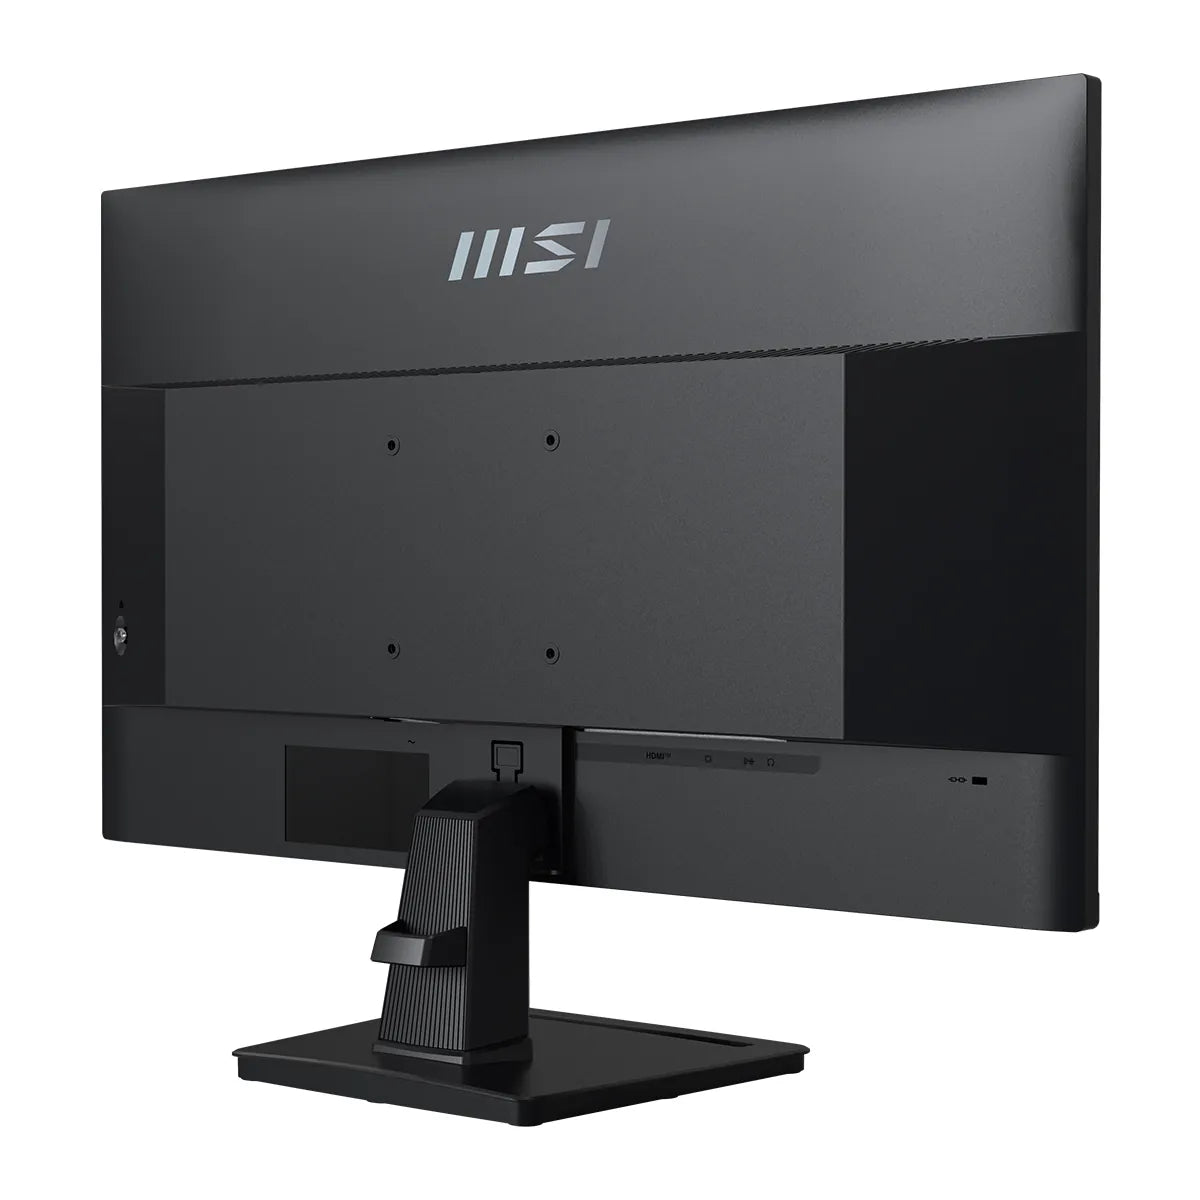 MSI 微星 Pro MP275 專業顯示器 (27吋 / FHD / 100Hz / IPS / 內置喇叭) - 1920 x 1080  3年上門保養